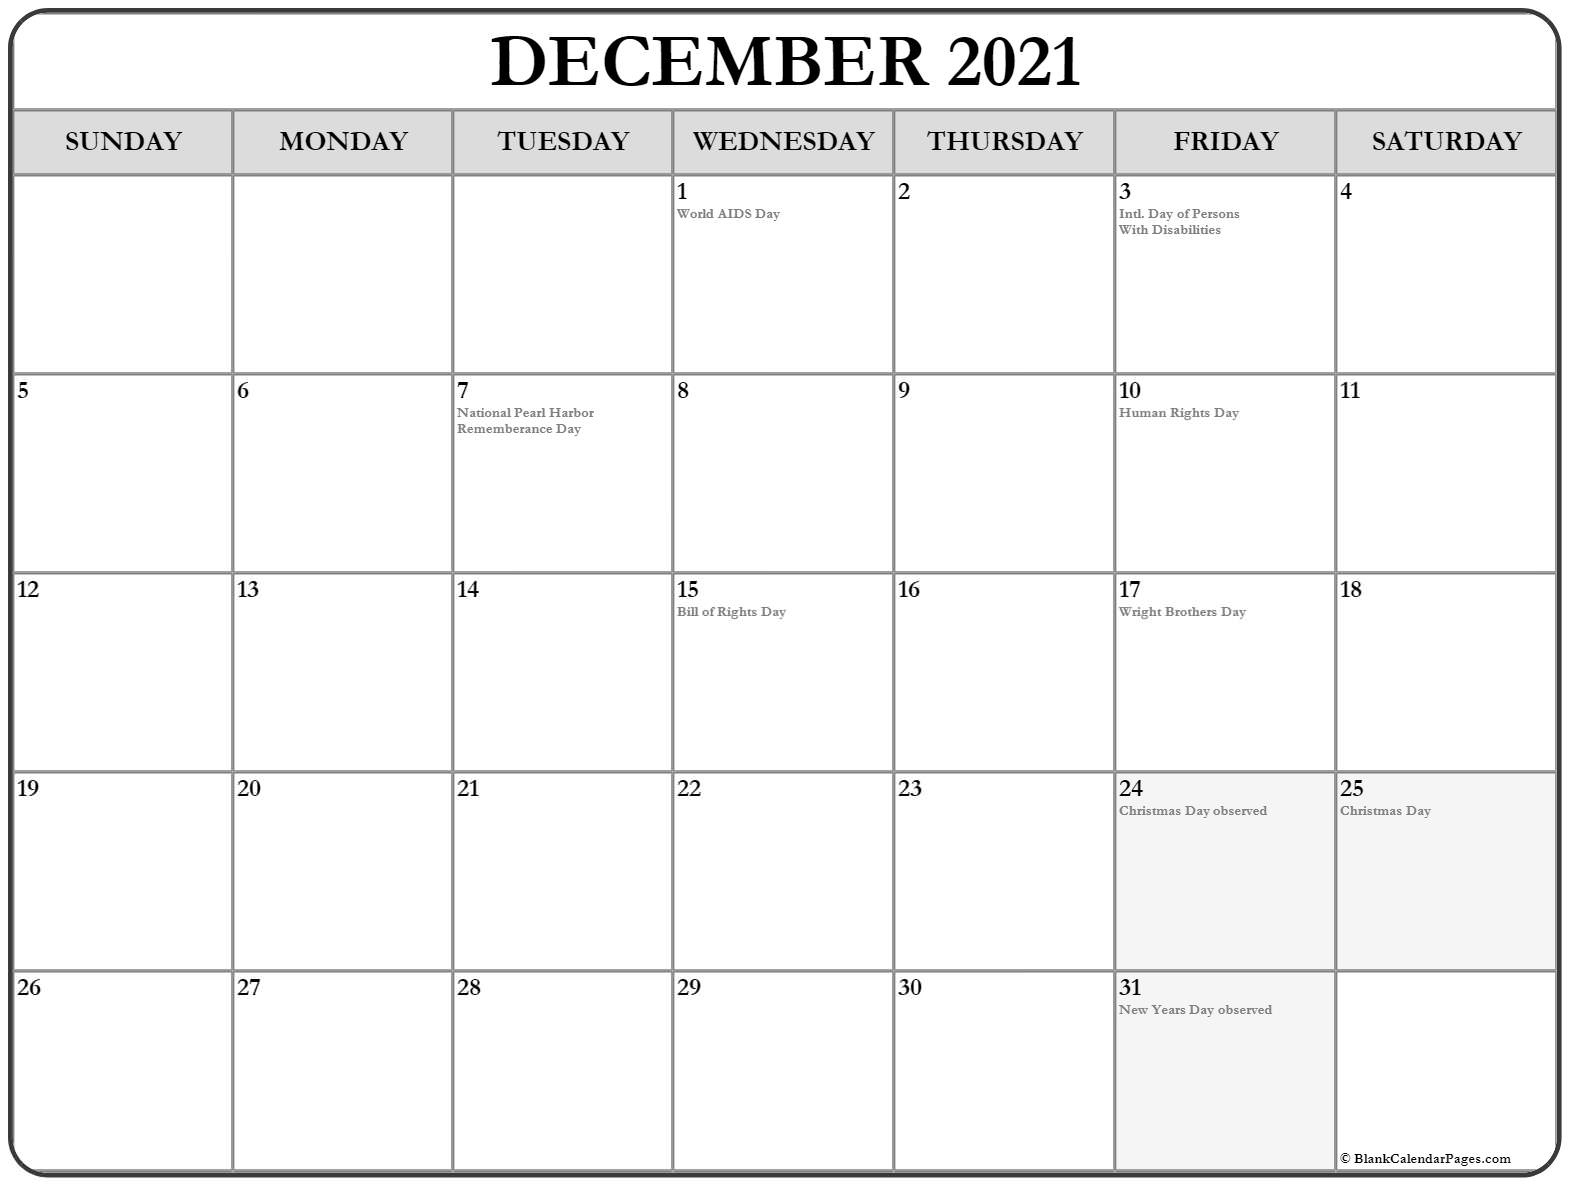 December 2021 Calendar | 56+ Templates Of 2021 Printable Calendars December 2021 Calendar Holidays